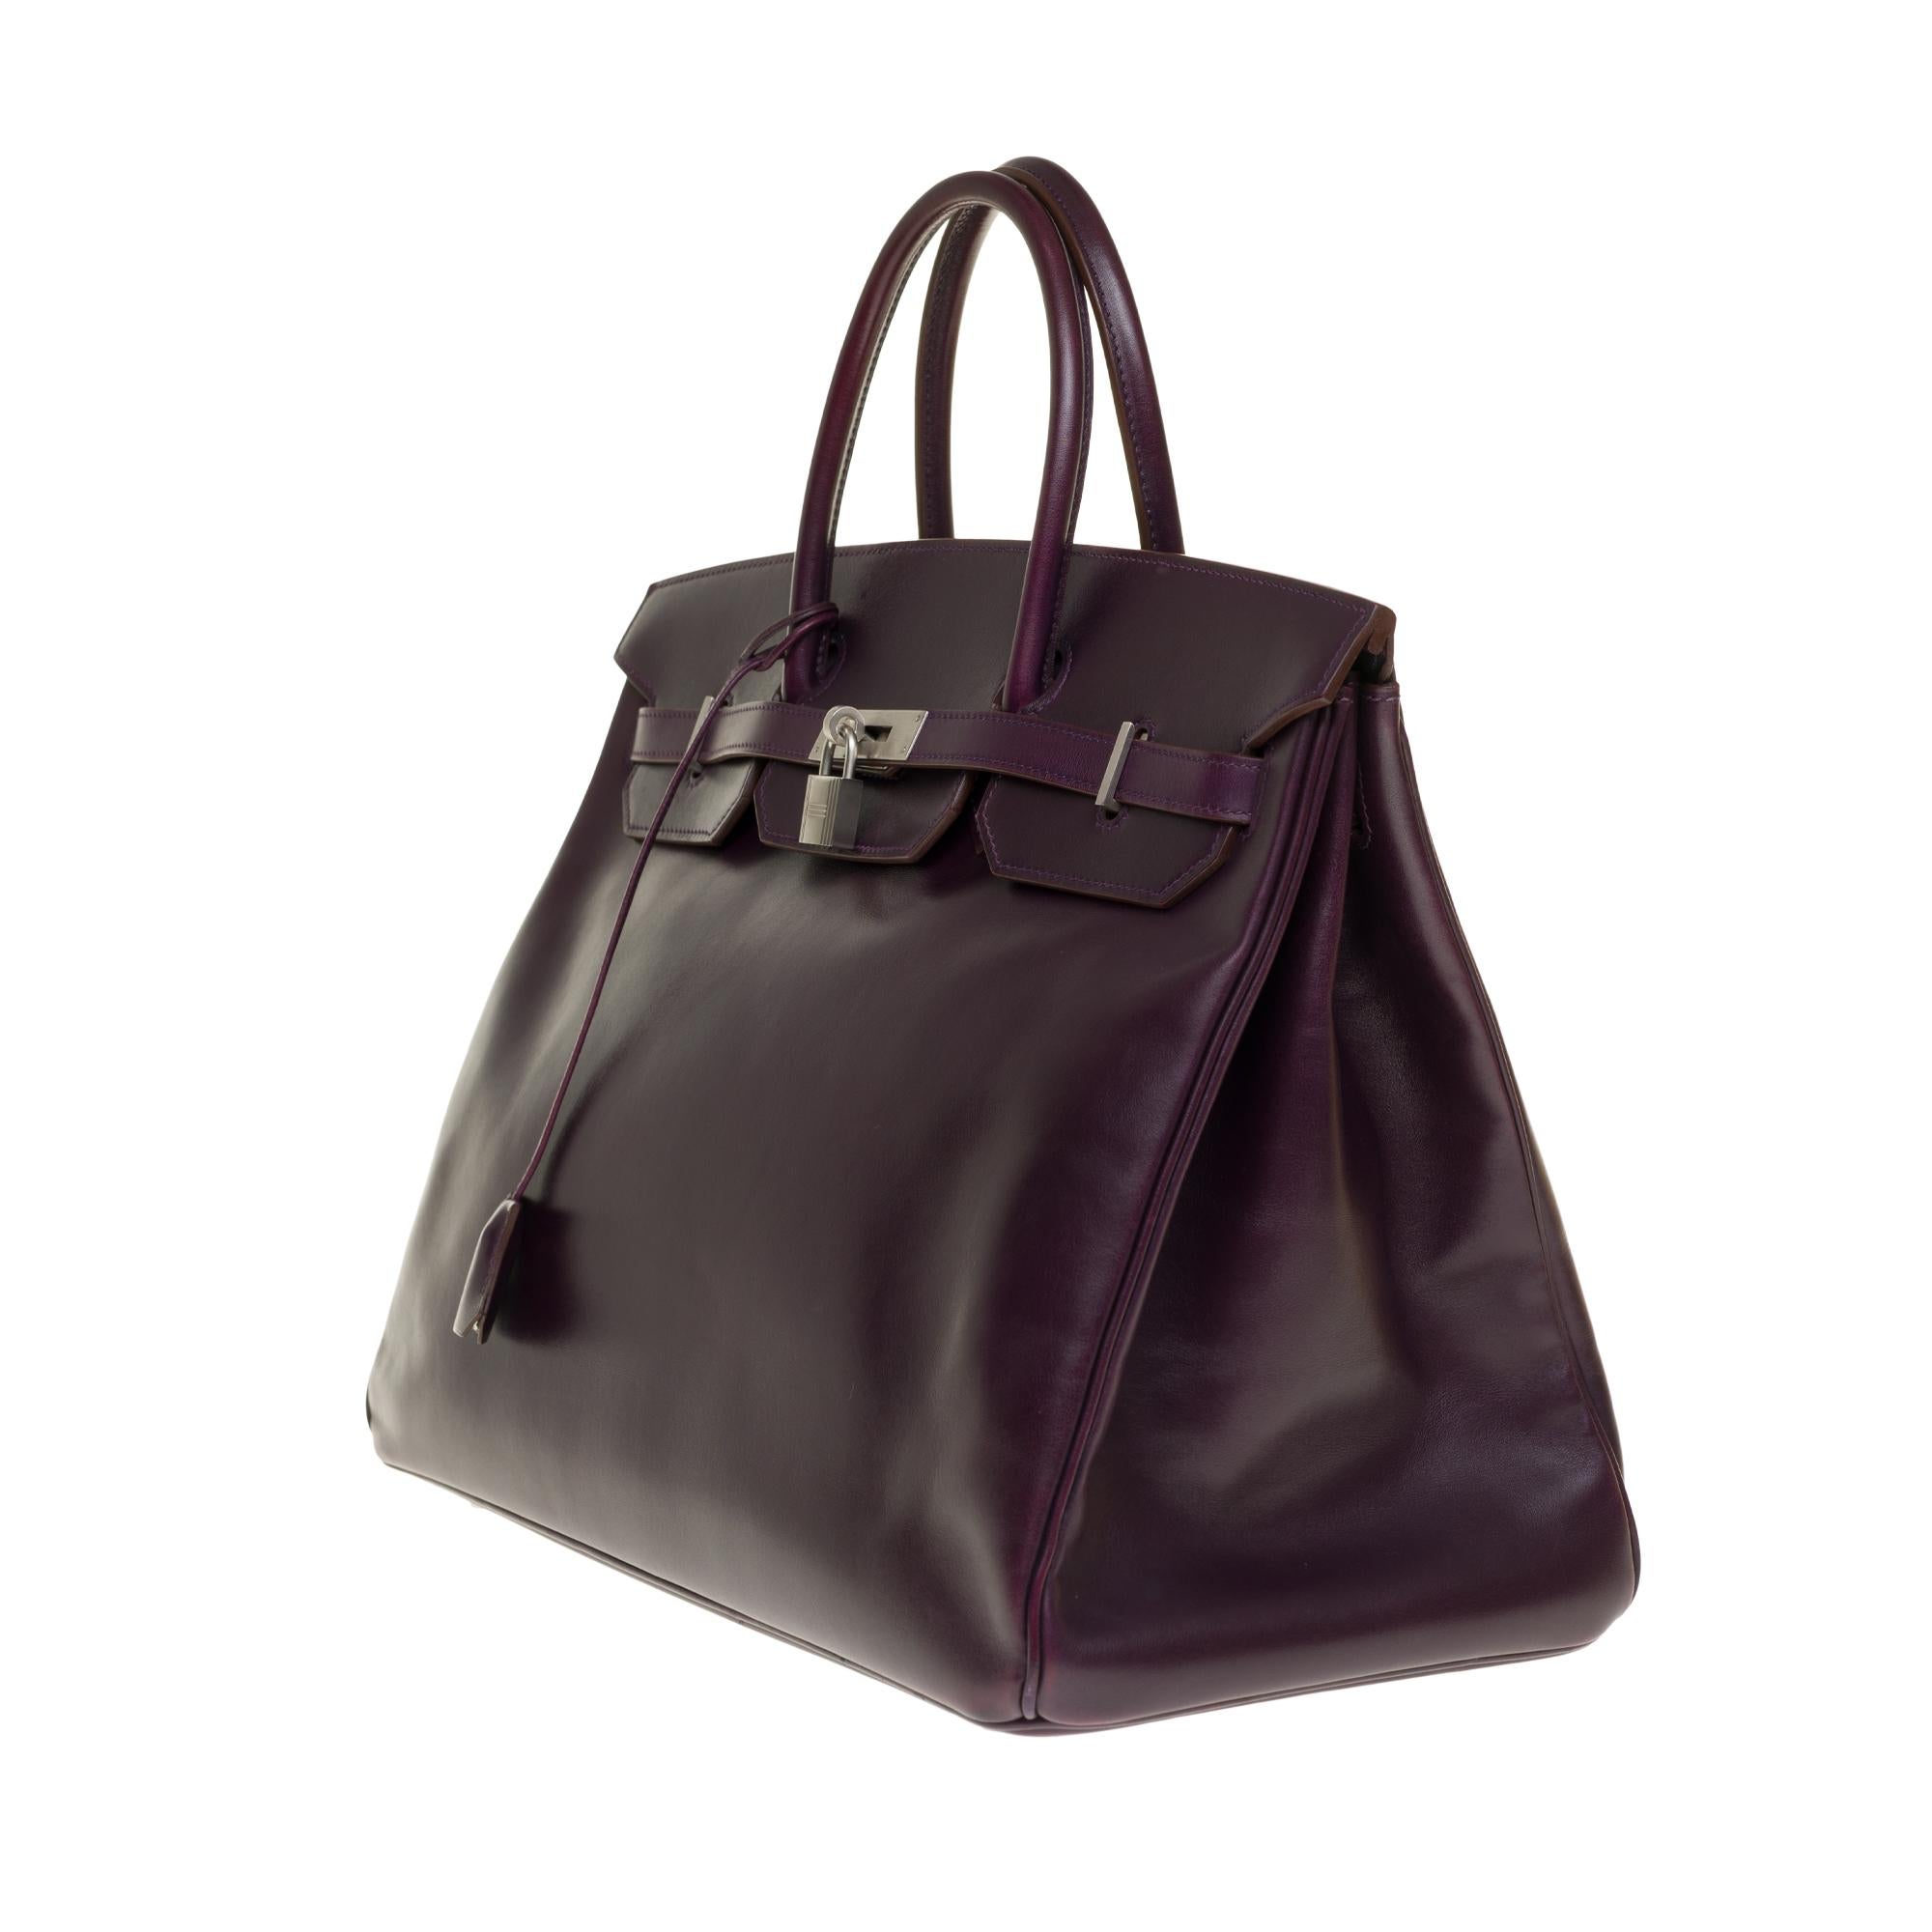 Black Rare Hermes Birkin 40 handbag in purple Box calfskin and brushed silver hardware